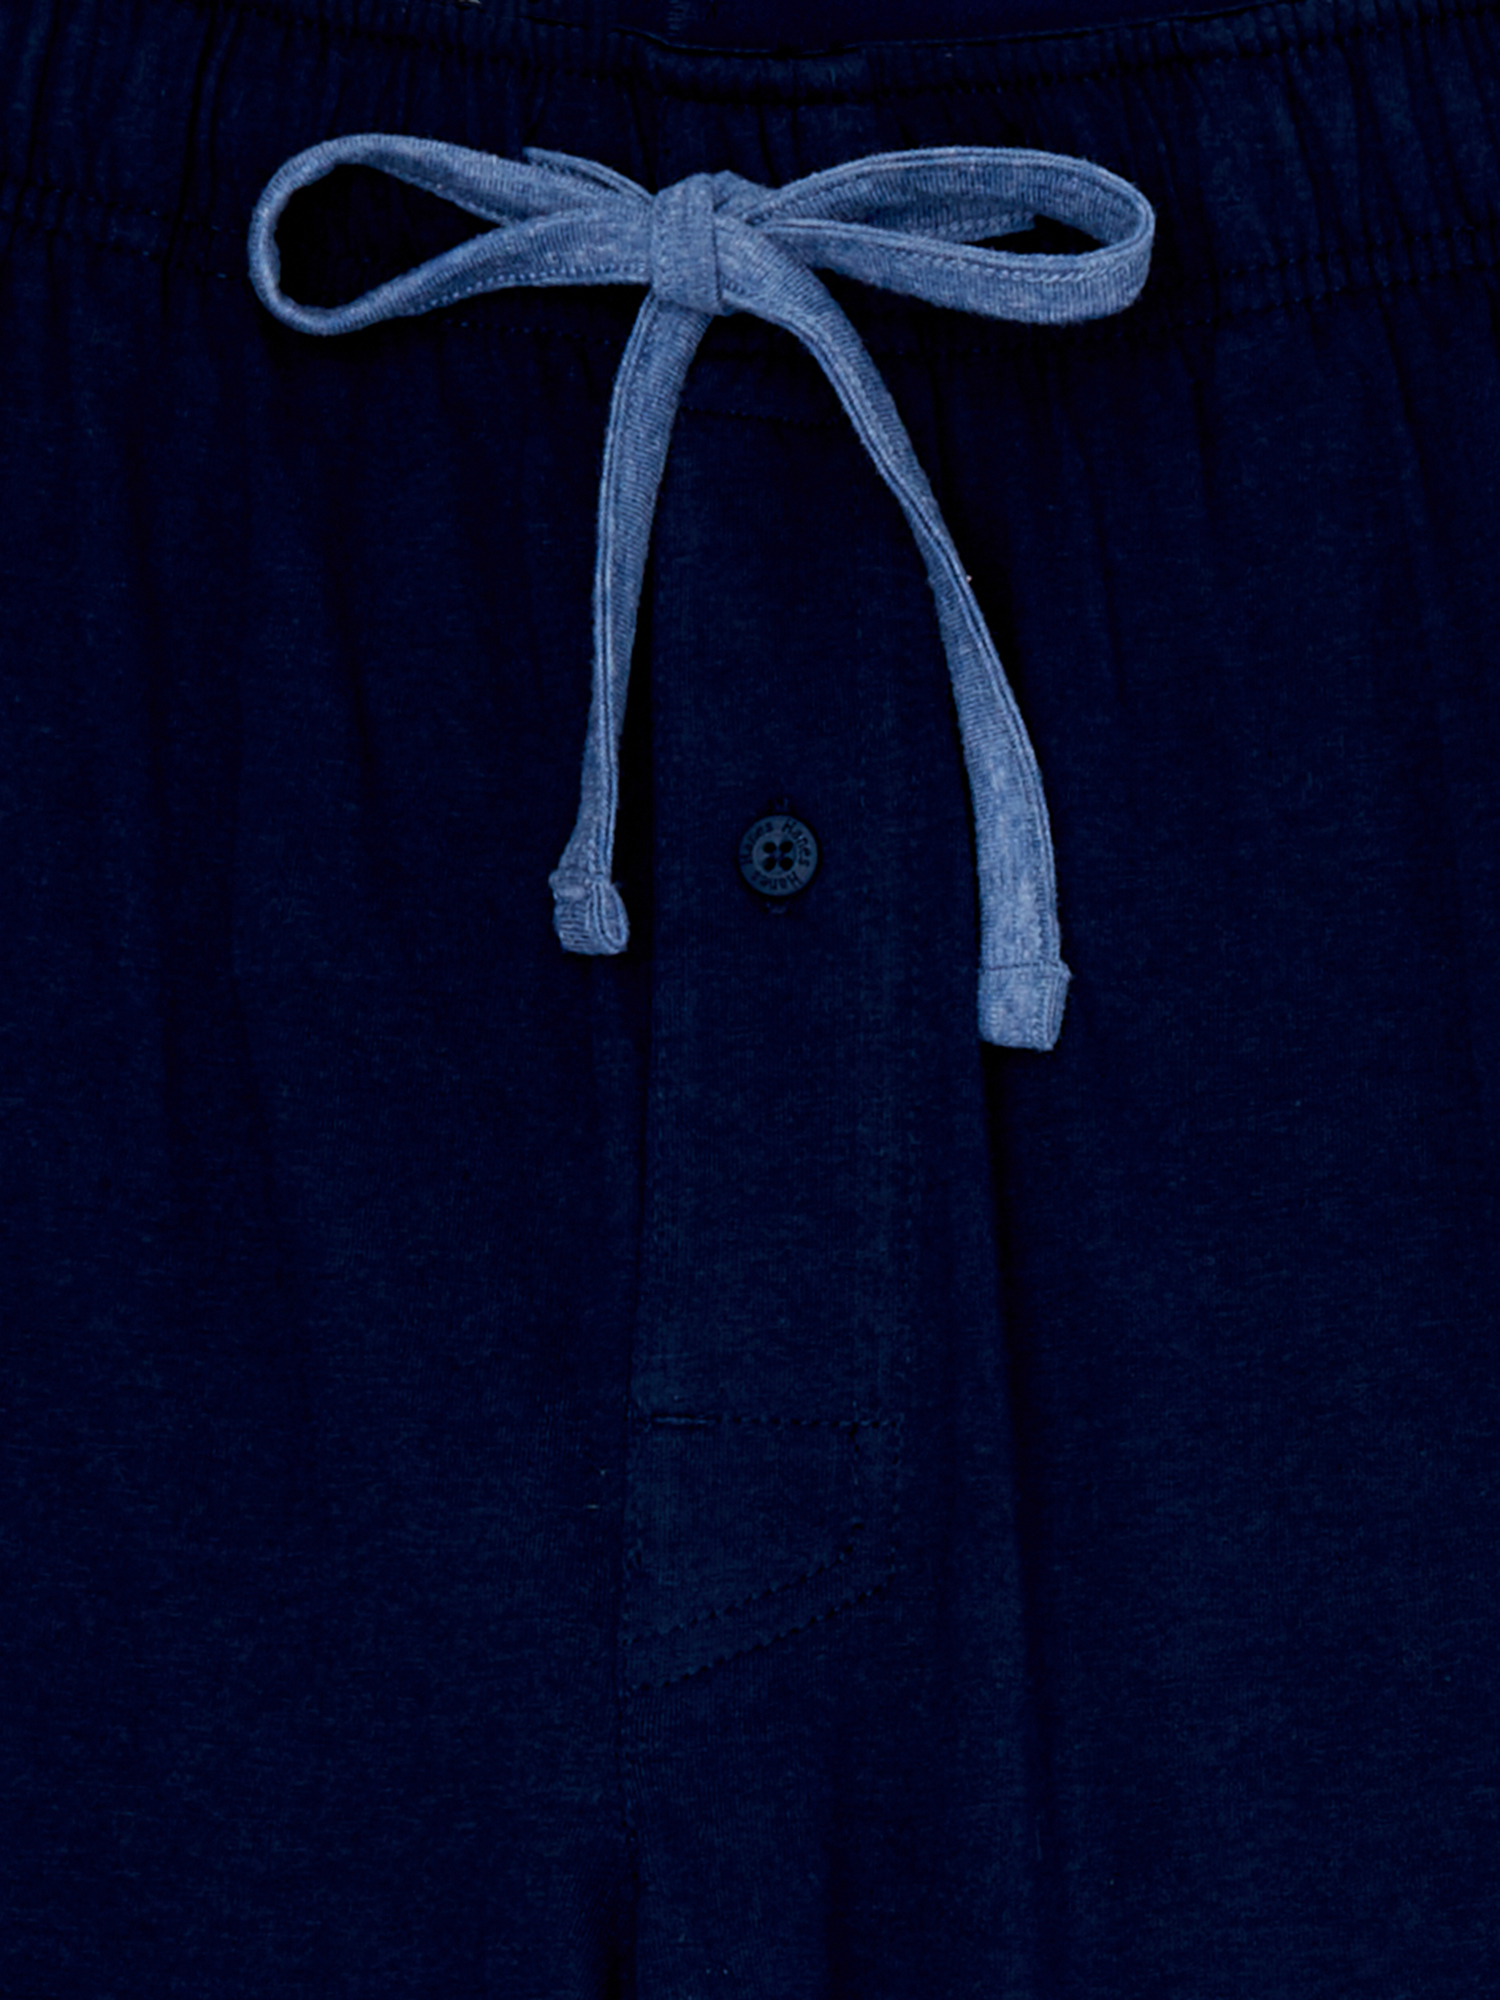 Hanes Men's and Big Men's Xtemp Knit Jam, 2-Pack - image 4 of 4